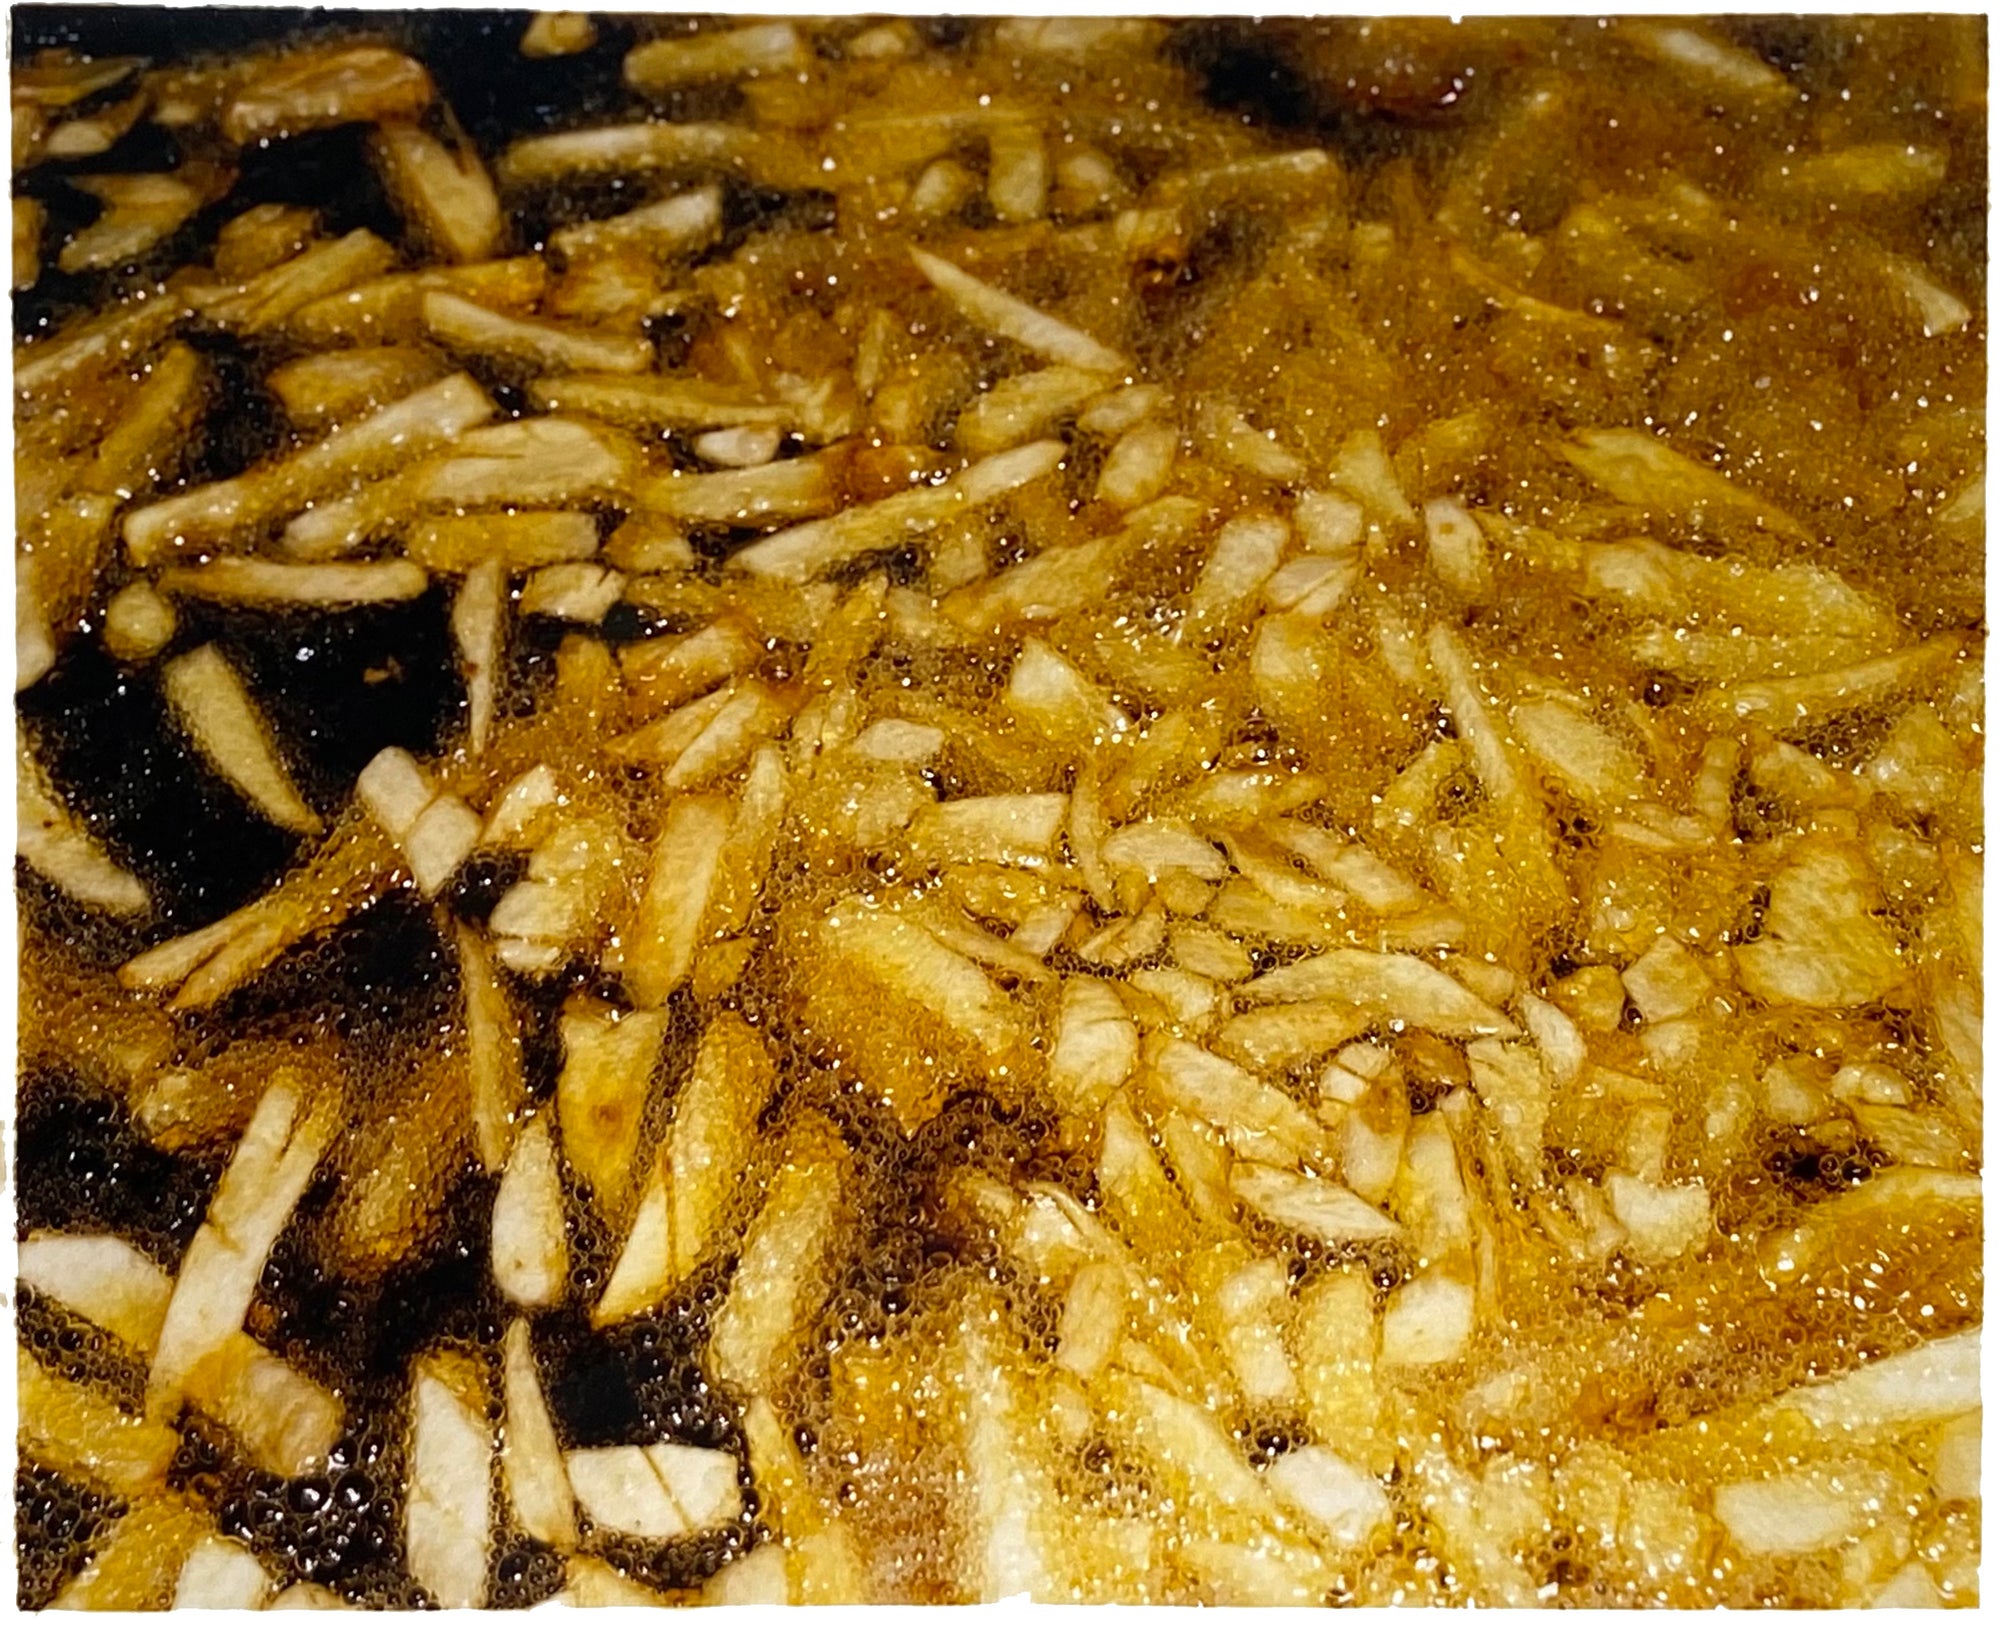 Chips in Chip Fryer - 'Seasons', Gloucester Road, London 2004